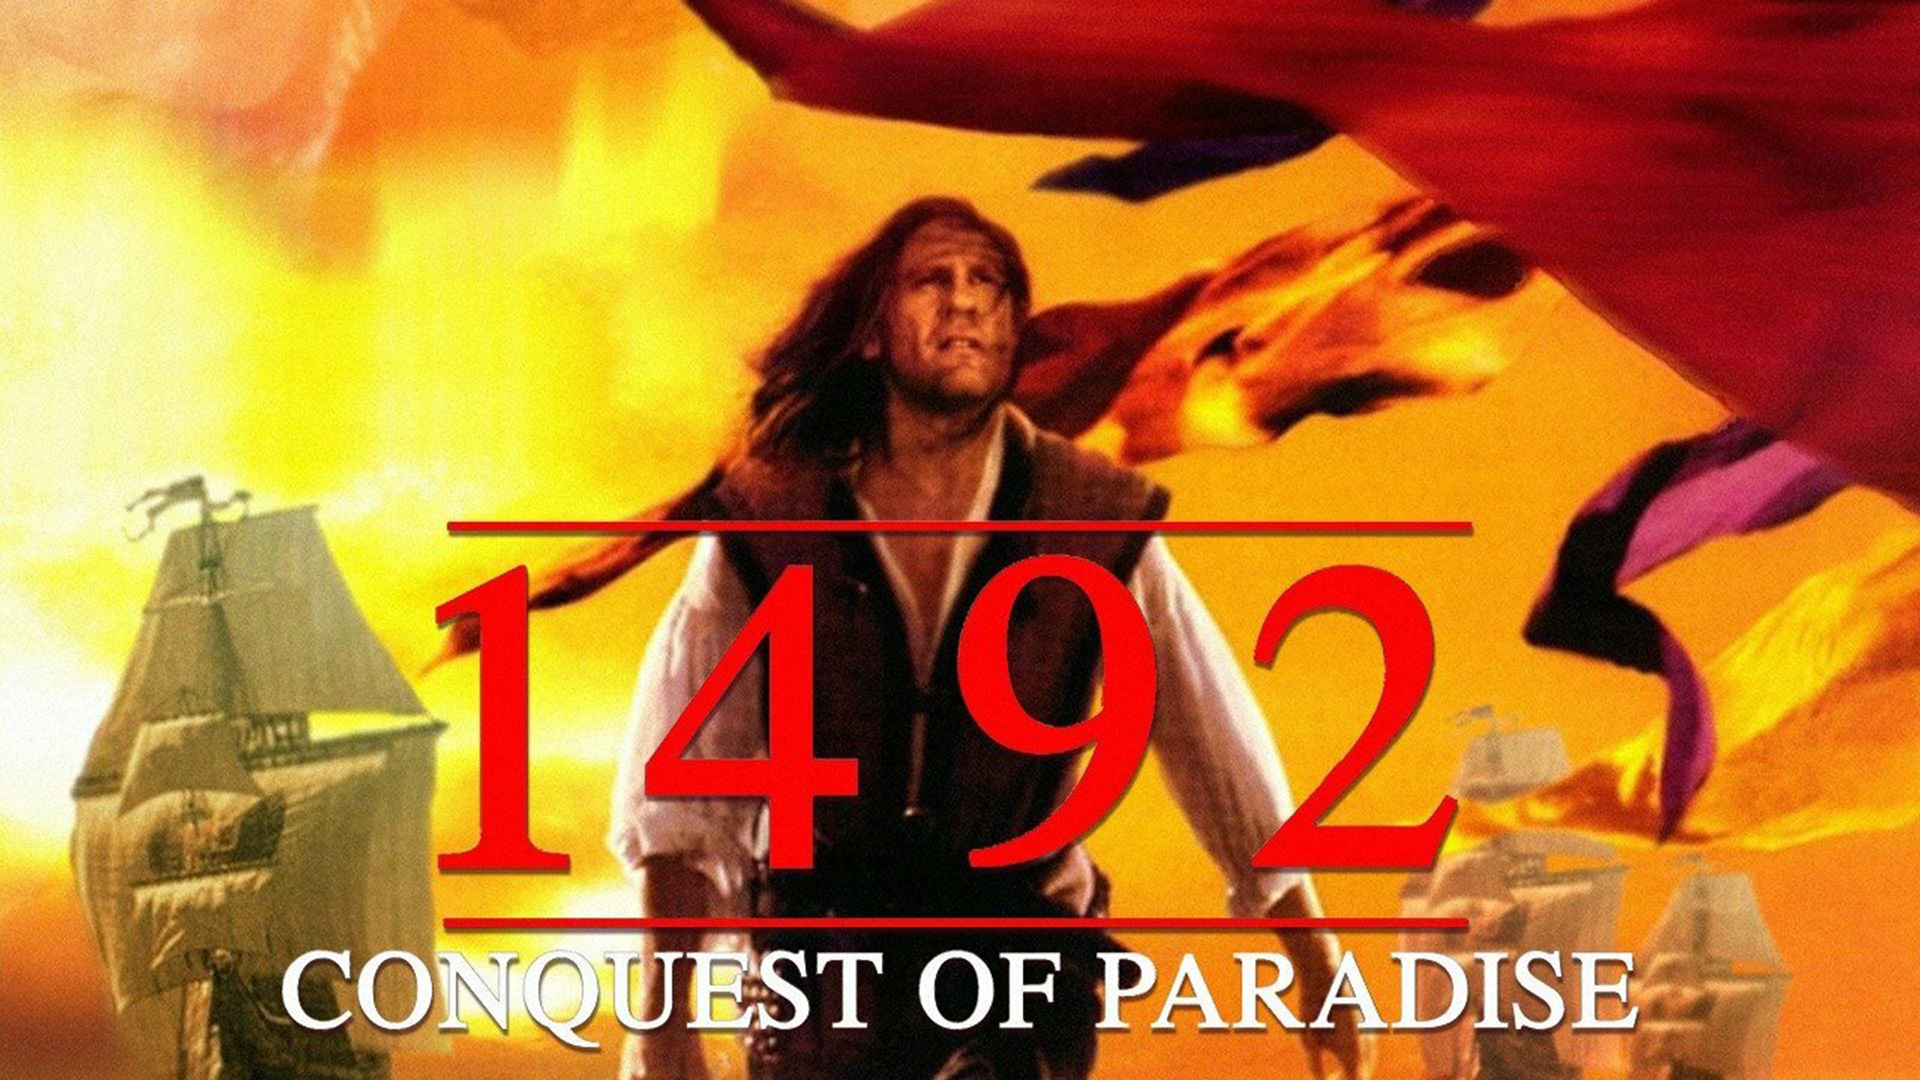 1492: Conquest Of Paradise